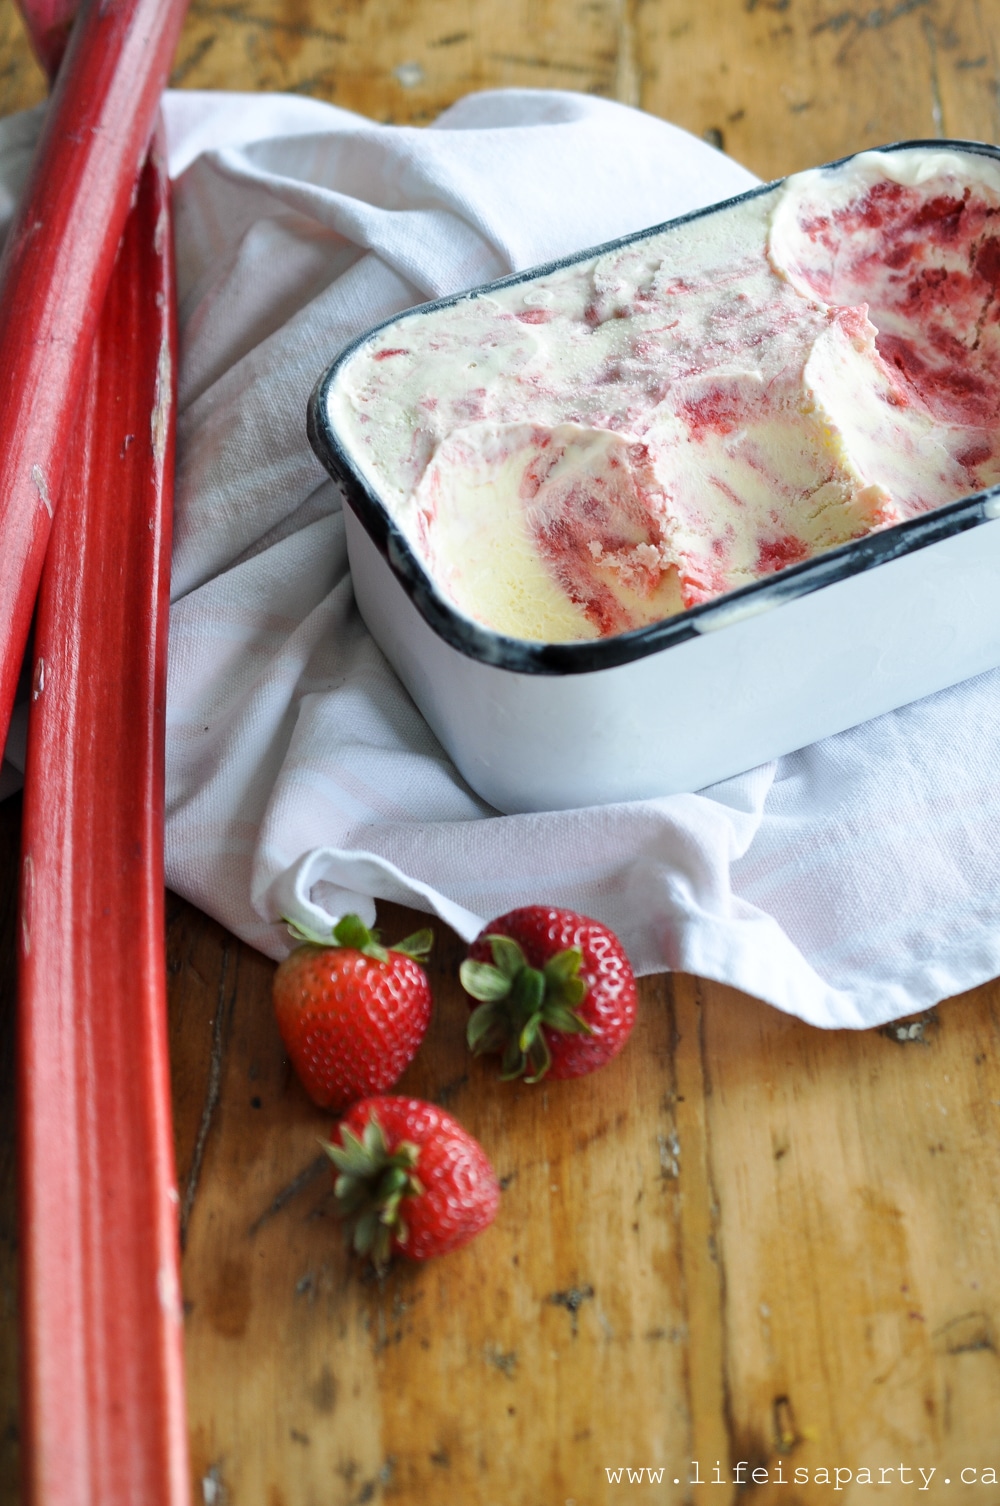 Homemade Rhubarb and Strawberry Ice Cream